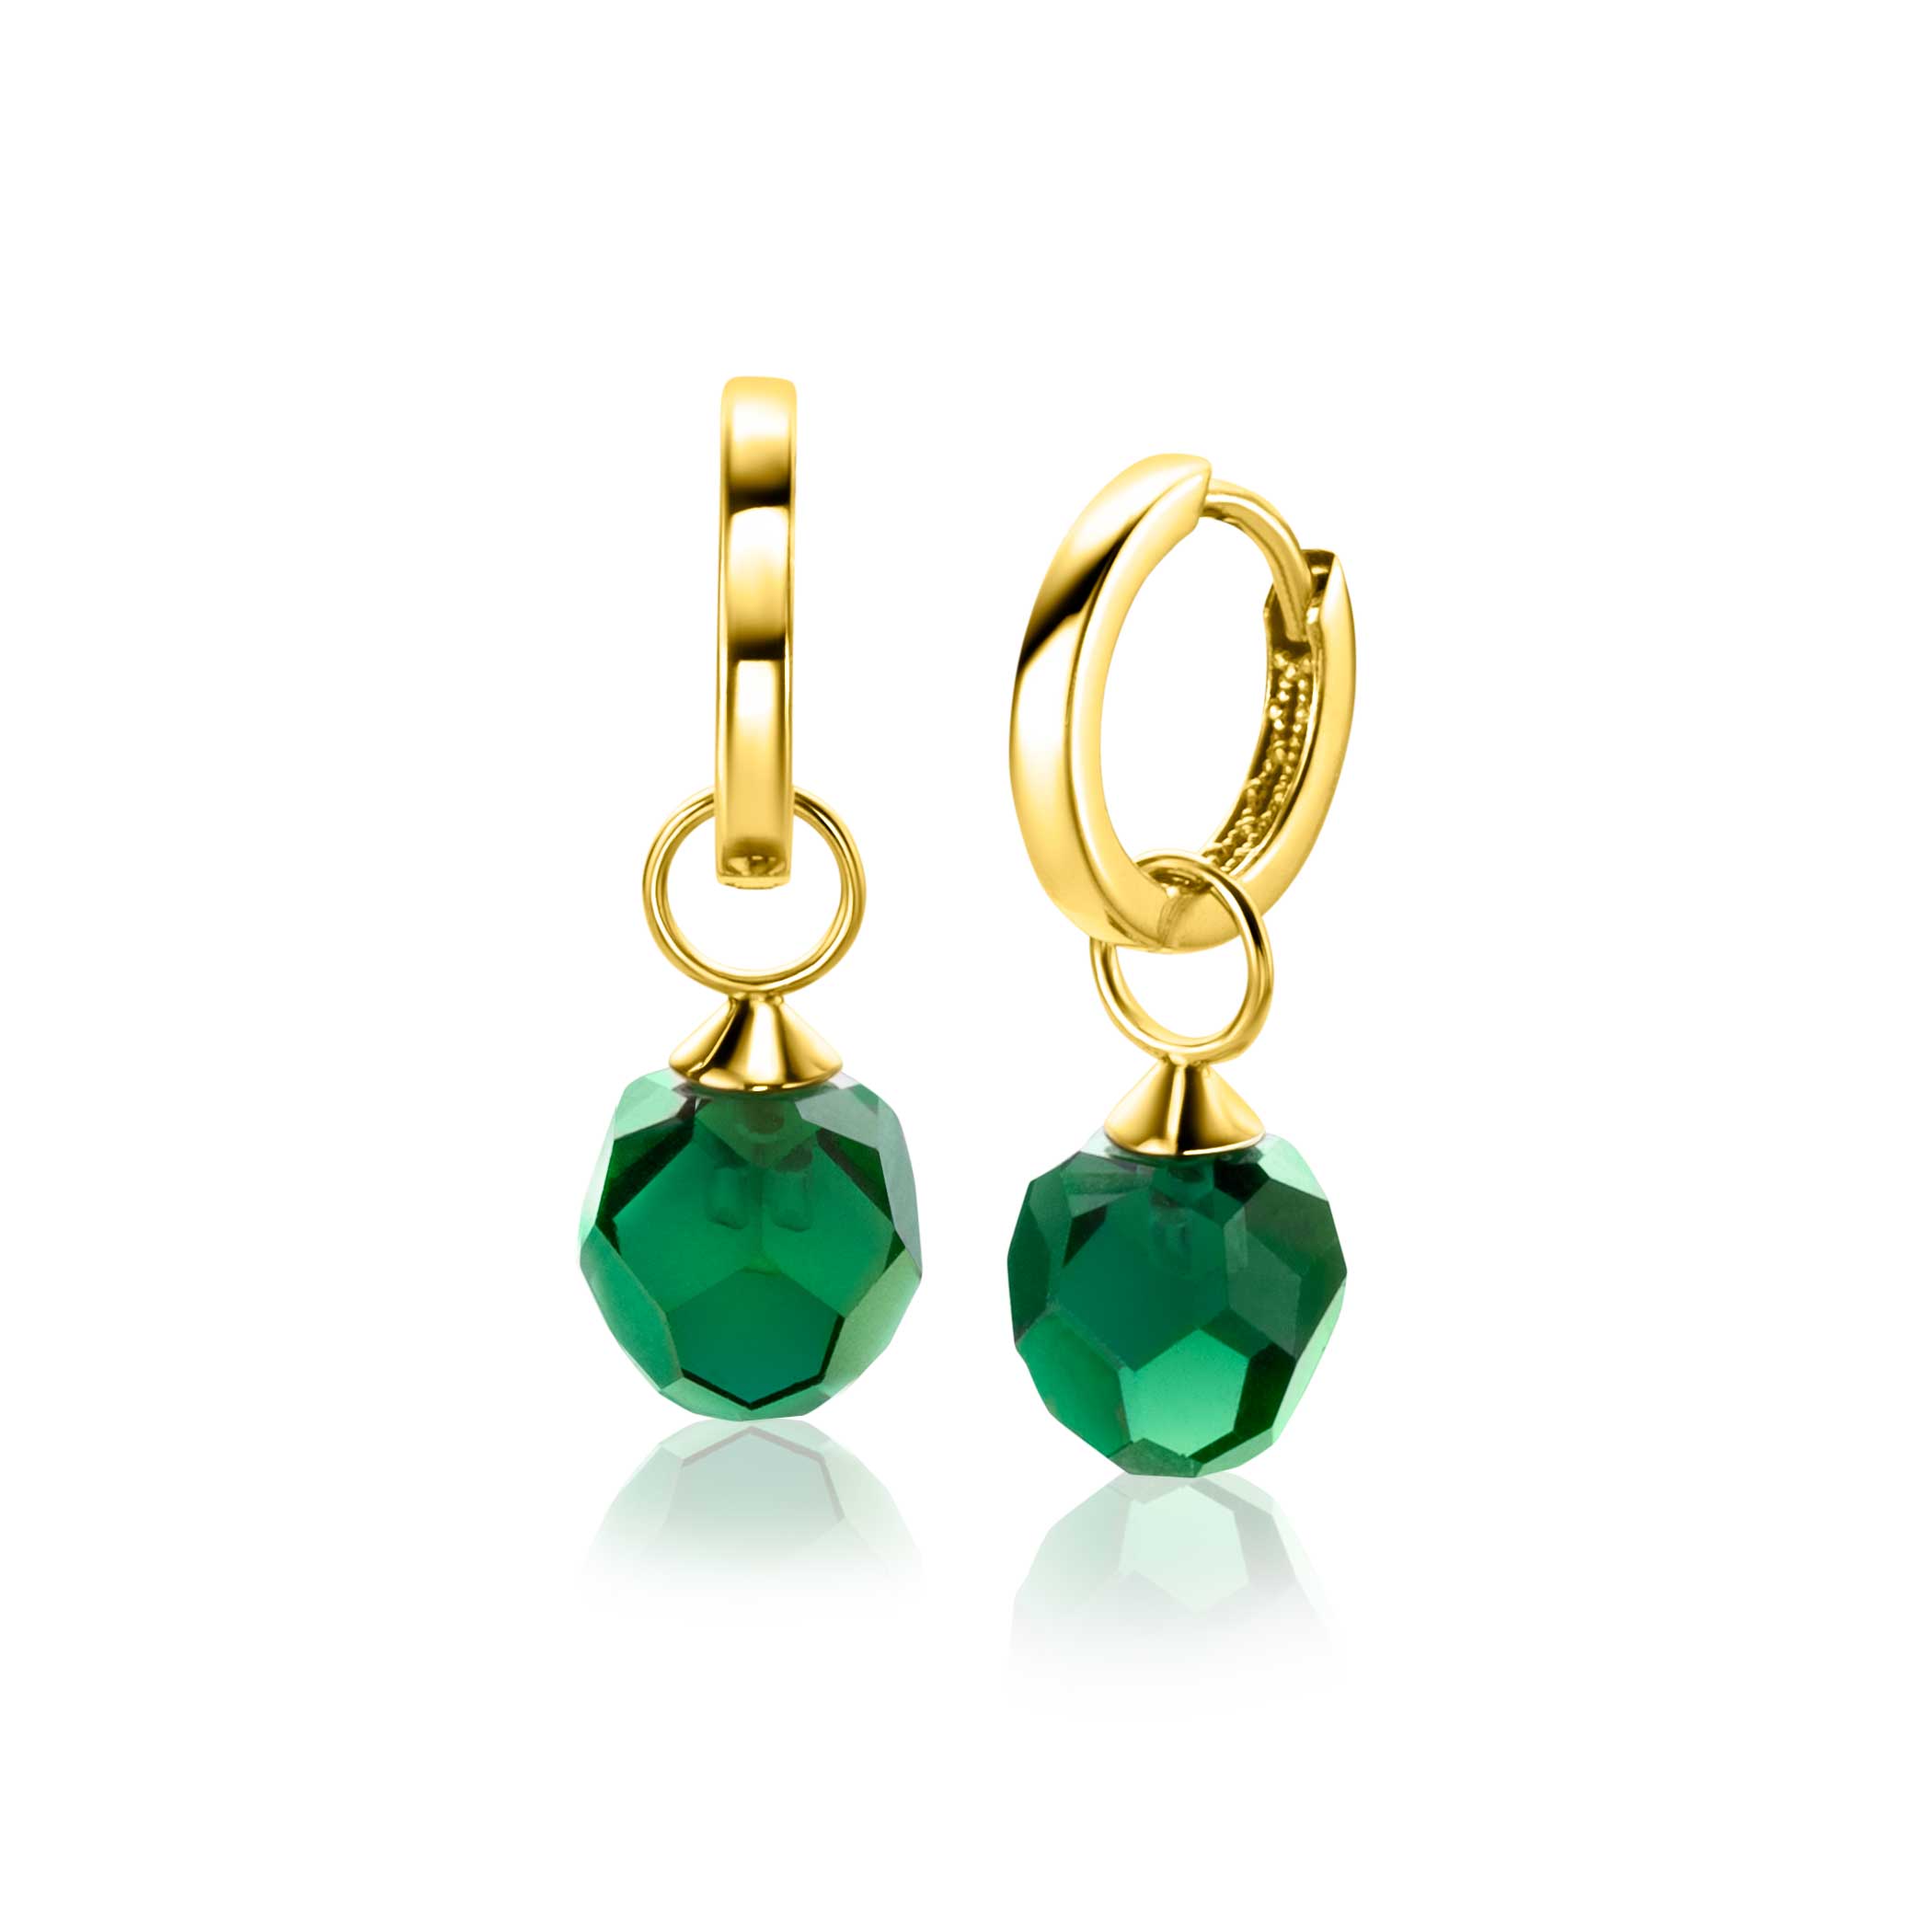 ZINZI 14K Gold Earrings Pendants Green Beads 8mm ZGCH144G (excl. hoop earrings)